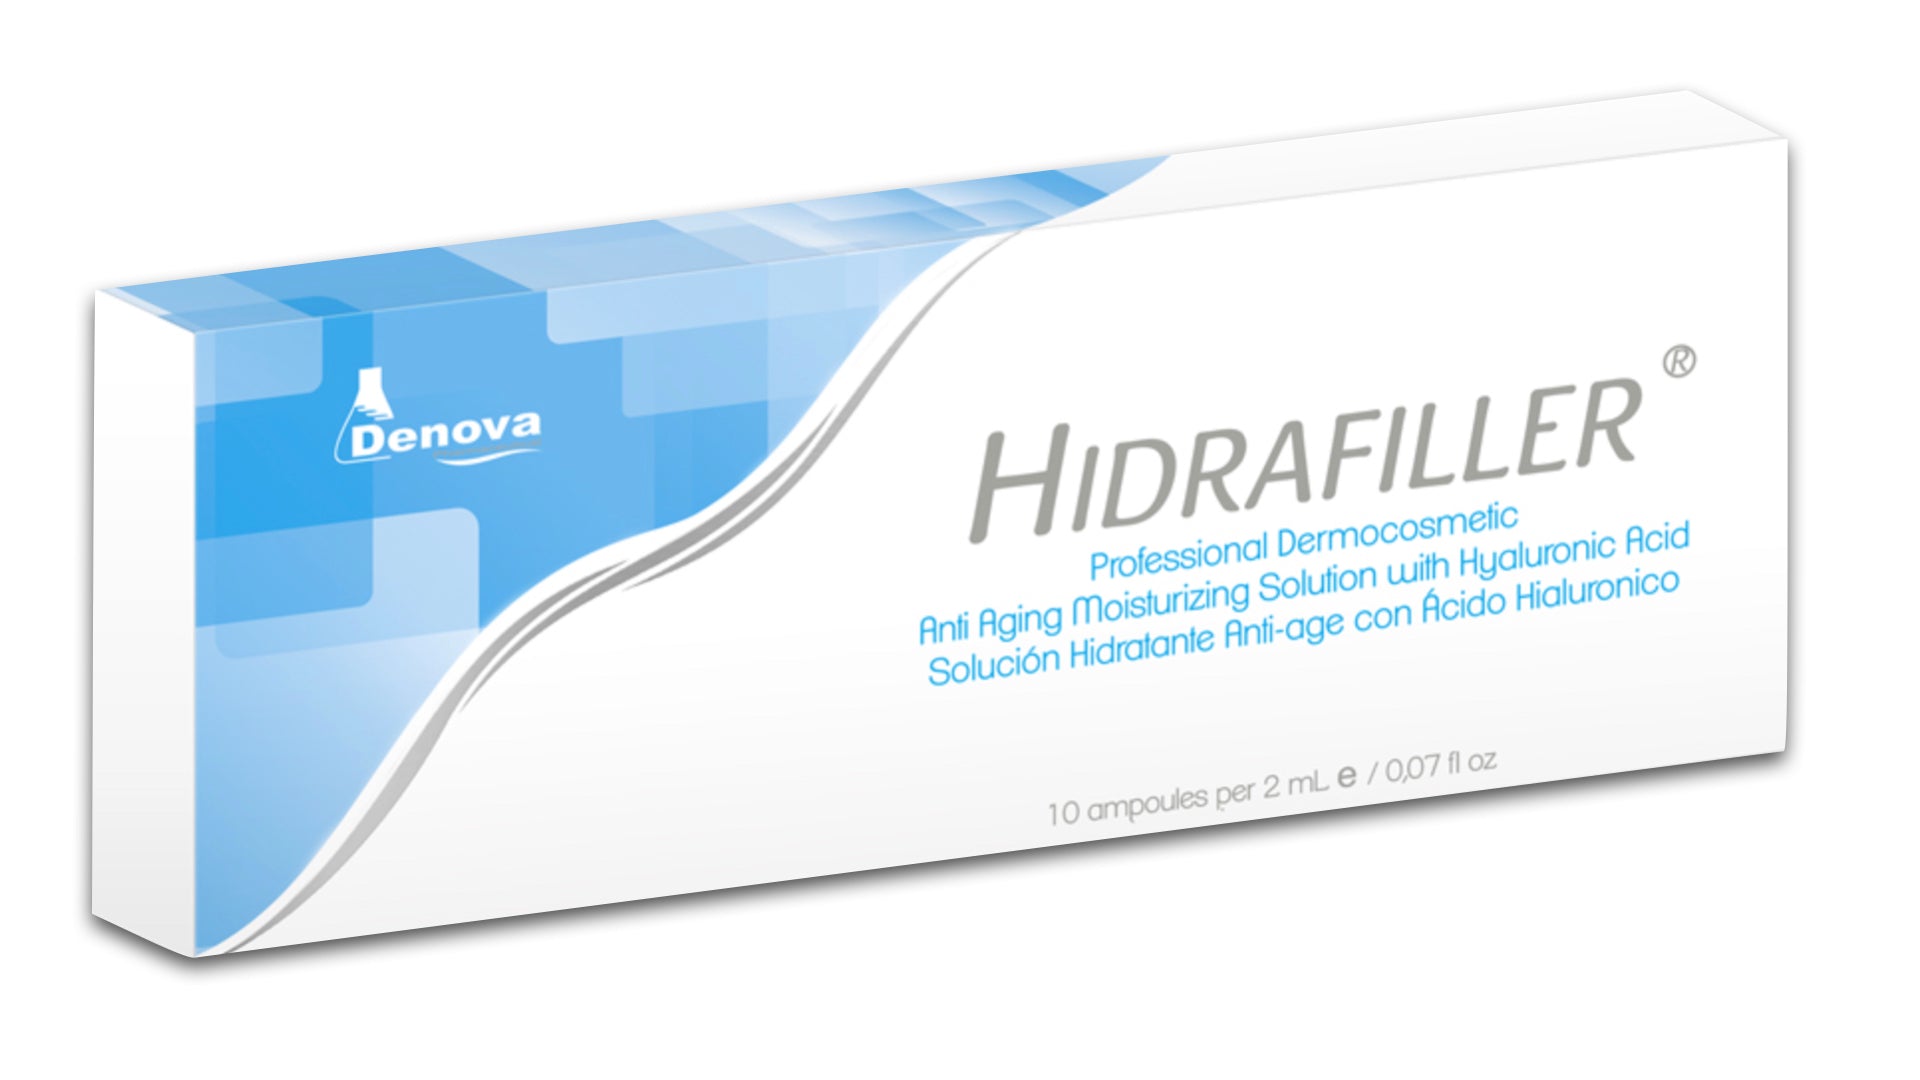 Hidrafiller 2% Hyaluronic Acid Anti-Aging Gel by Denova